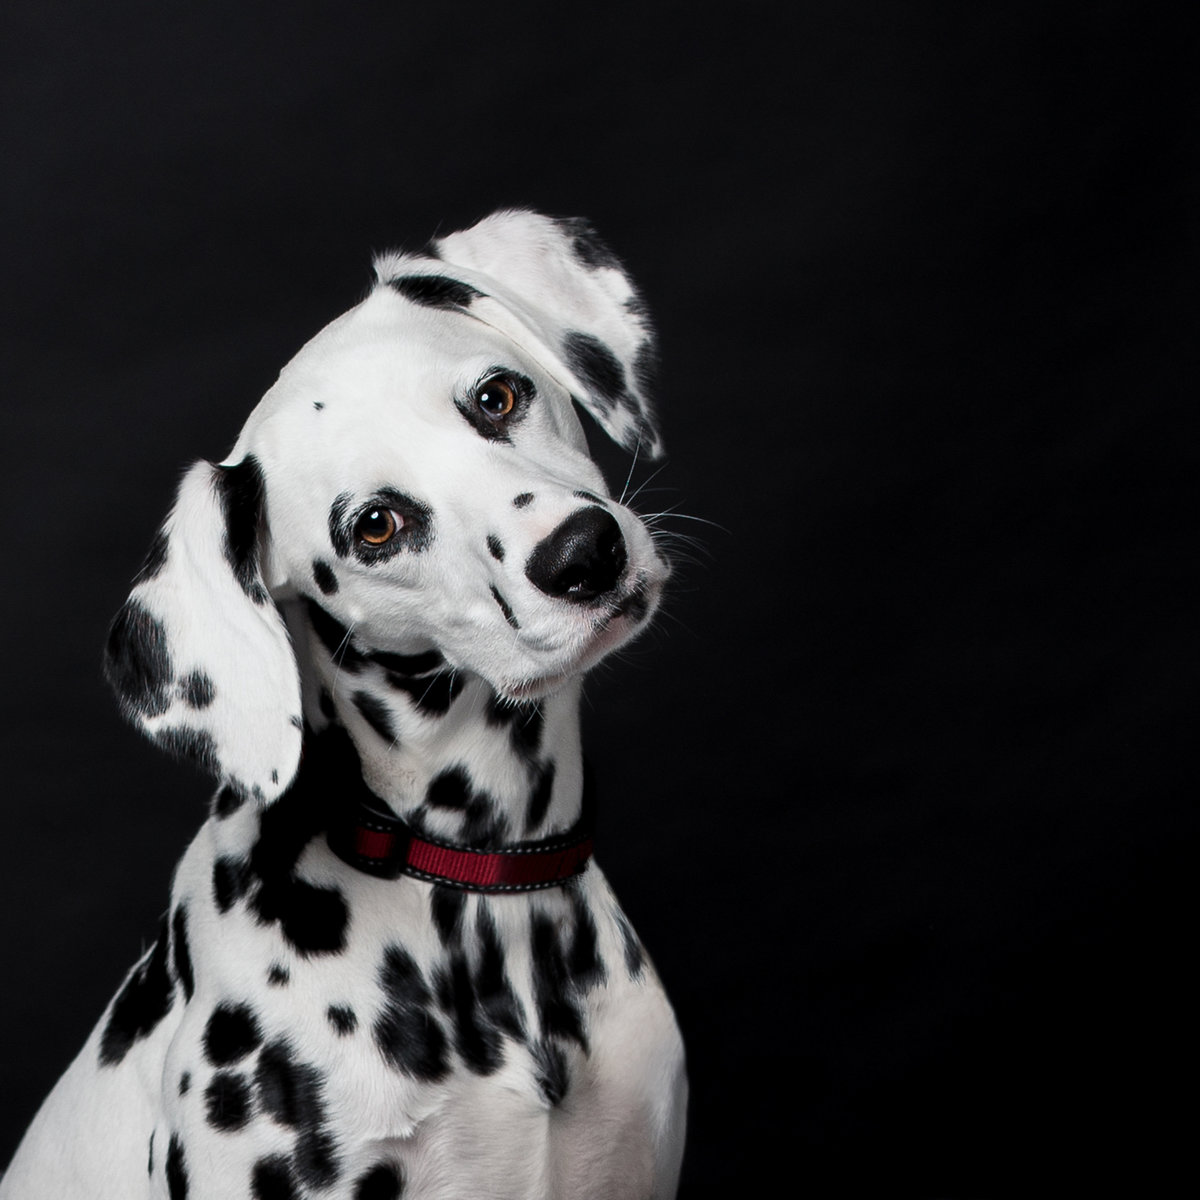 Dalmatian dog with head tilt on a black background